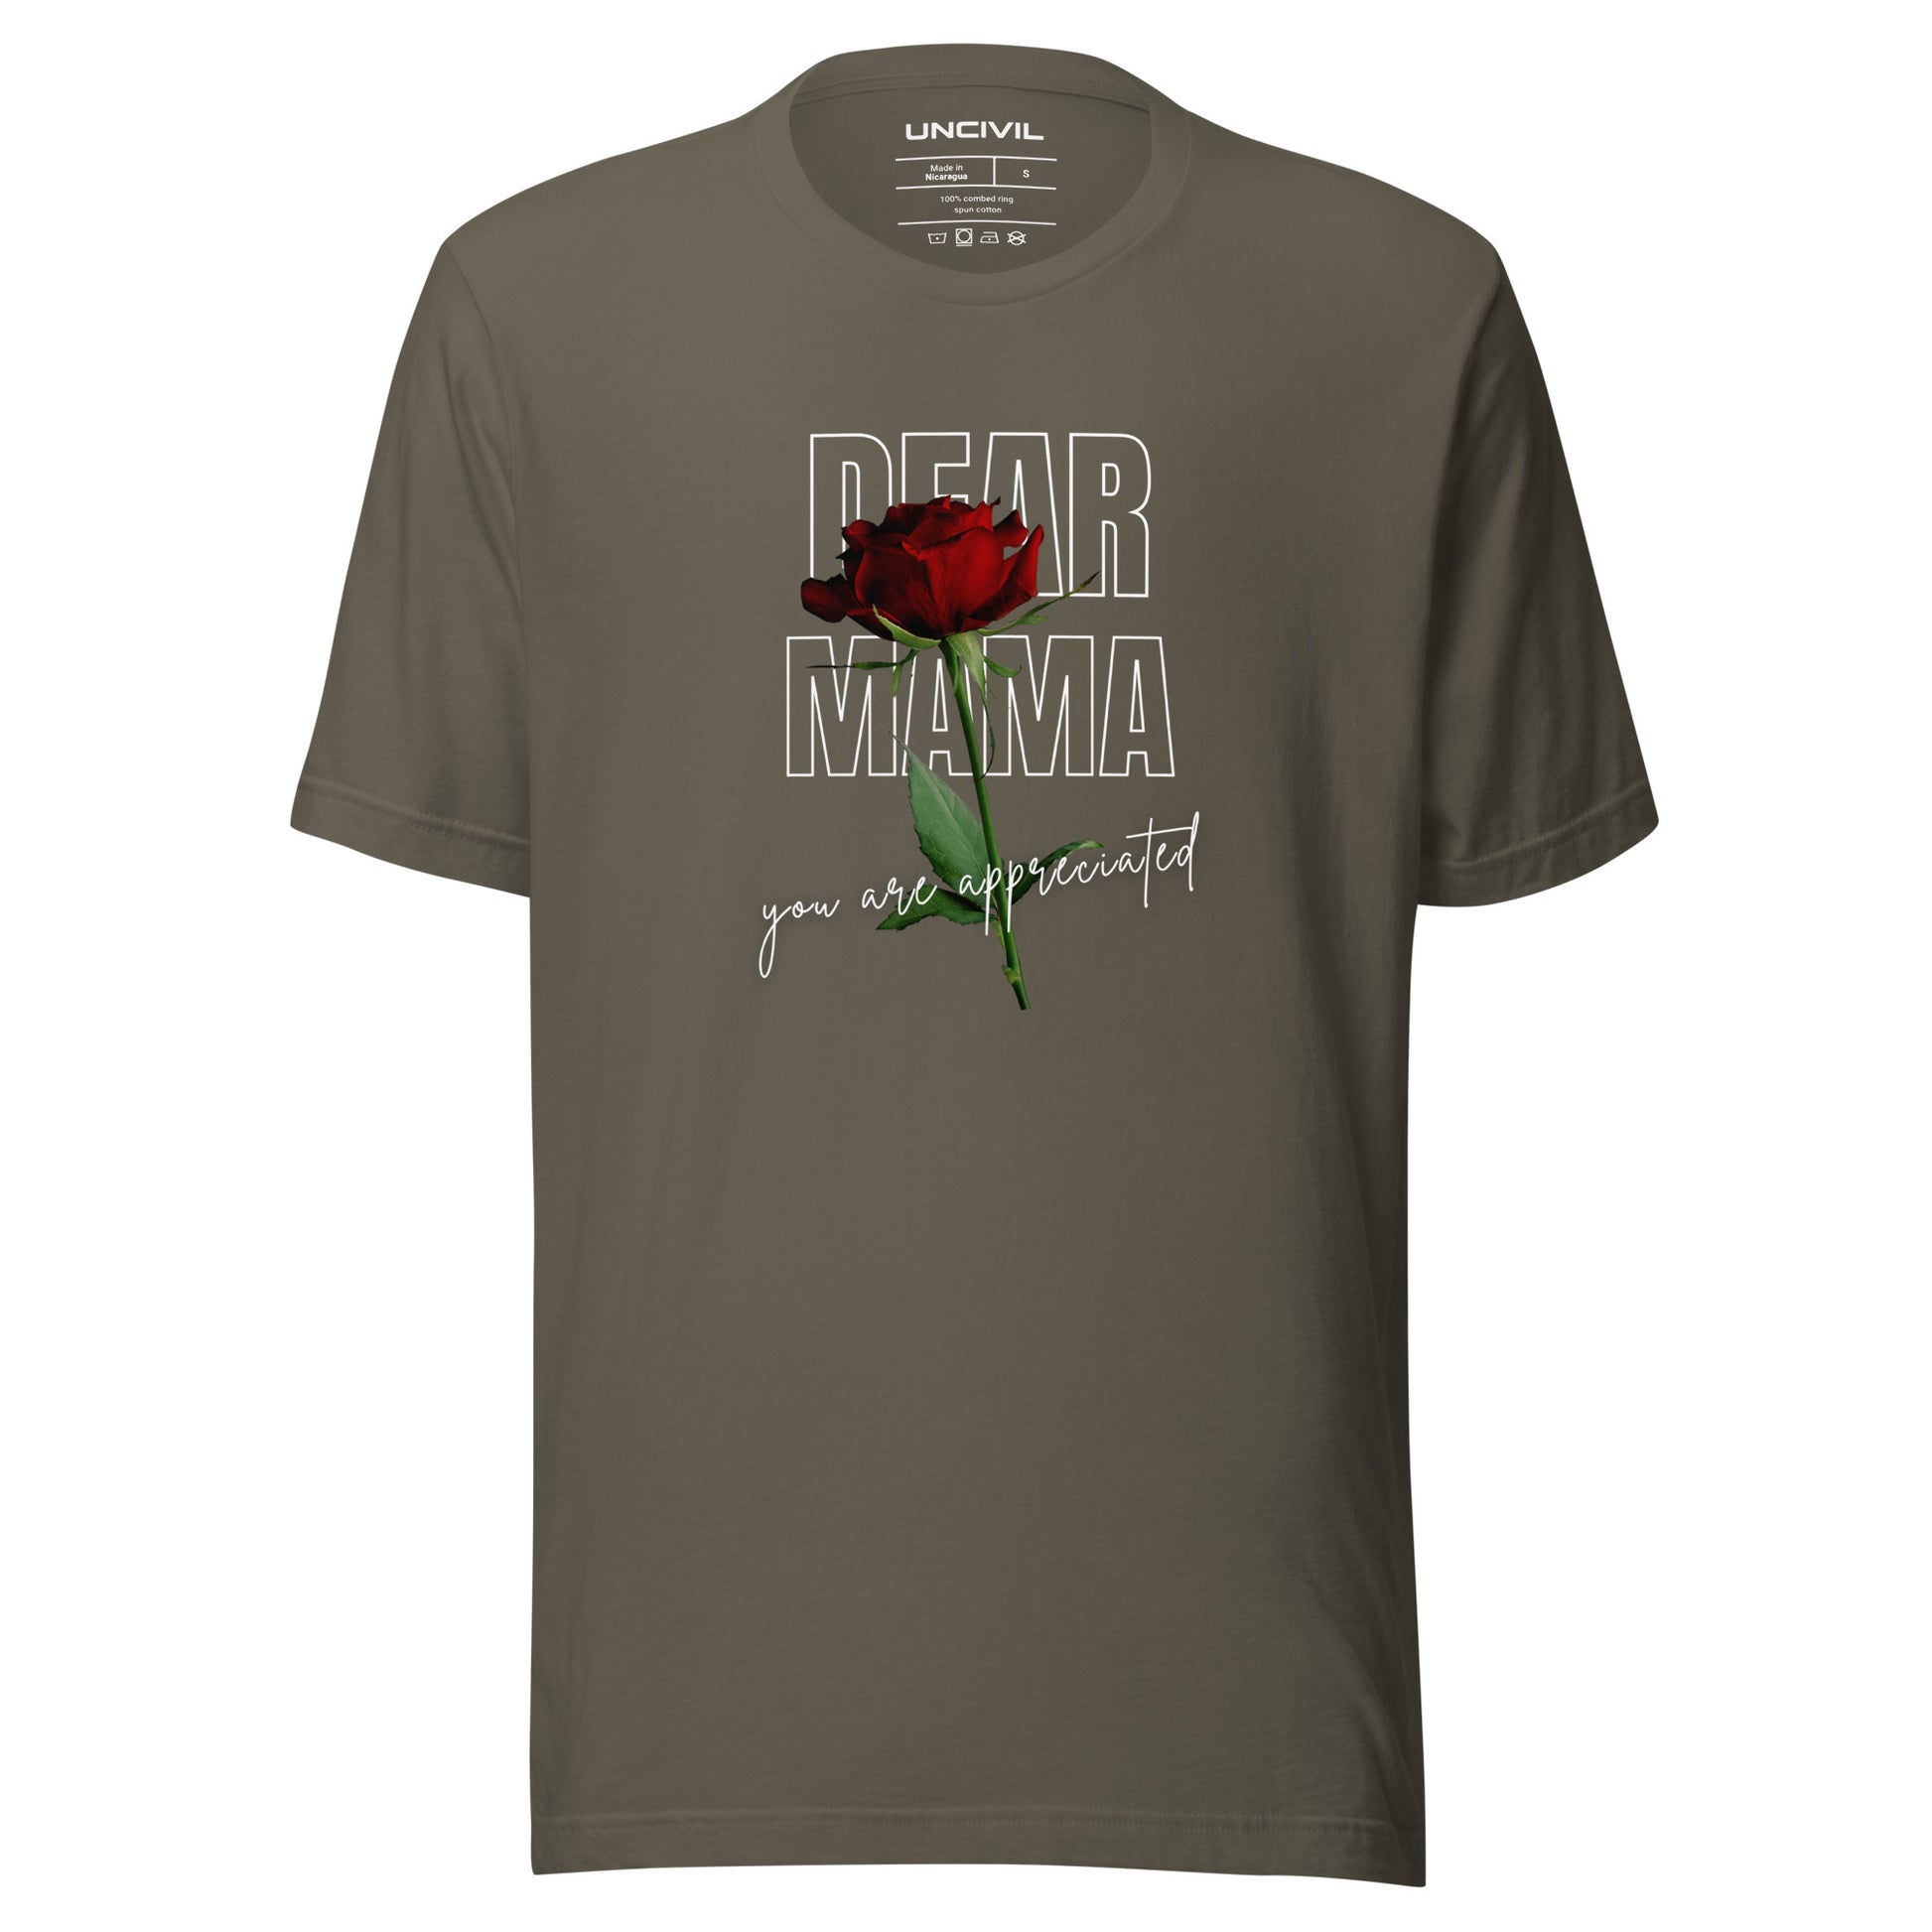 Dear Mama Tupac Shakur Inspired T-shirt, army green unisex tee